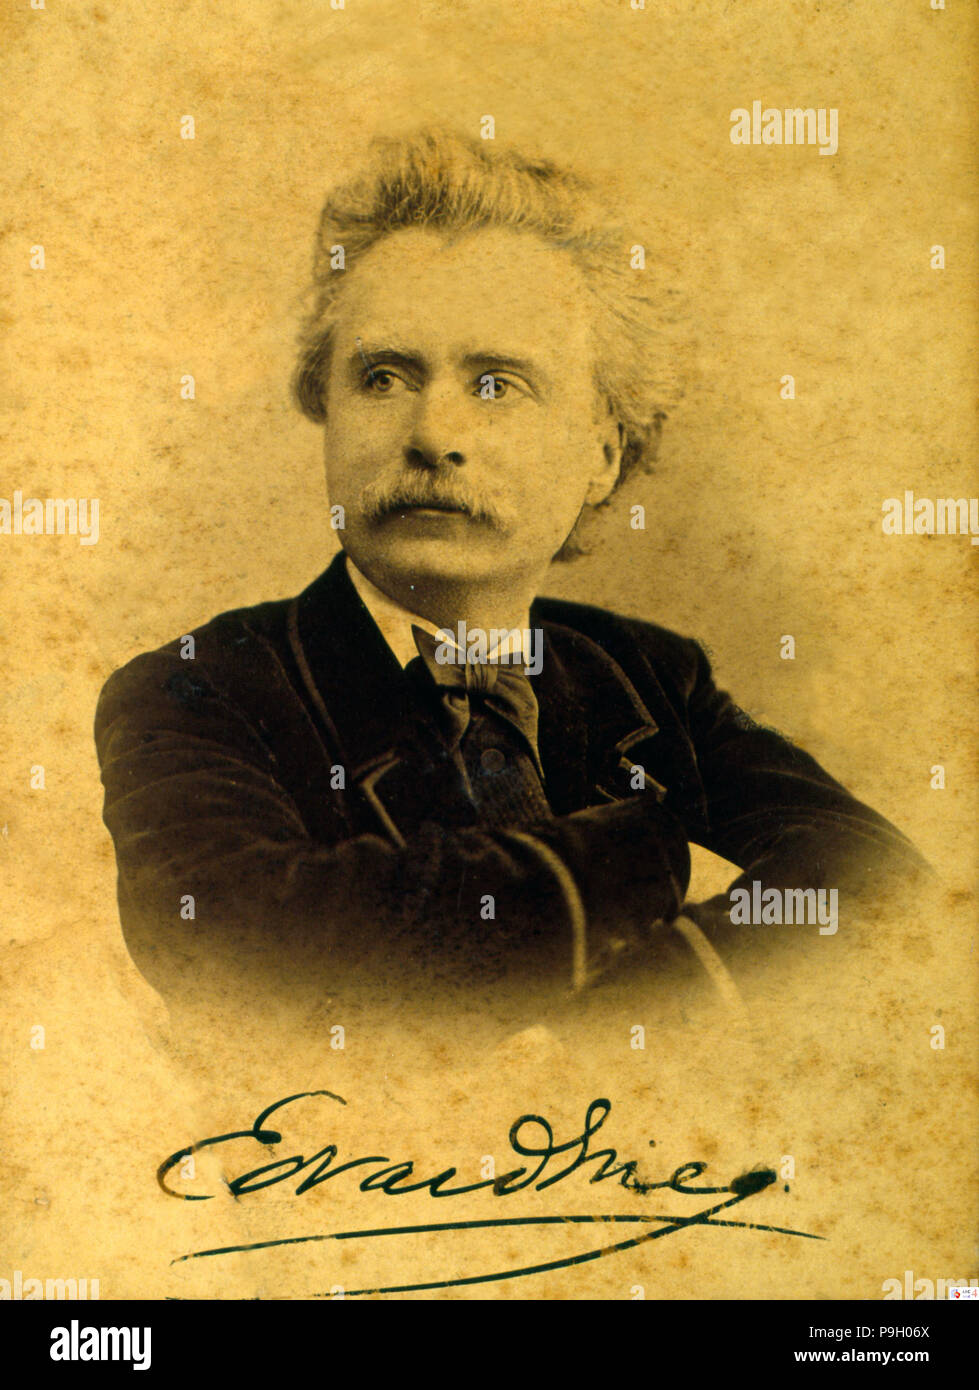 Edvard Grieg (1843-1907), compositore norvegese, autore del Peer Gynt, tra le altre opere. Foto Stock